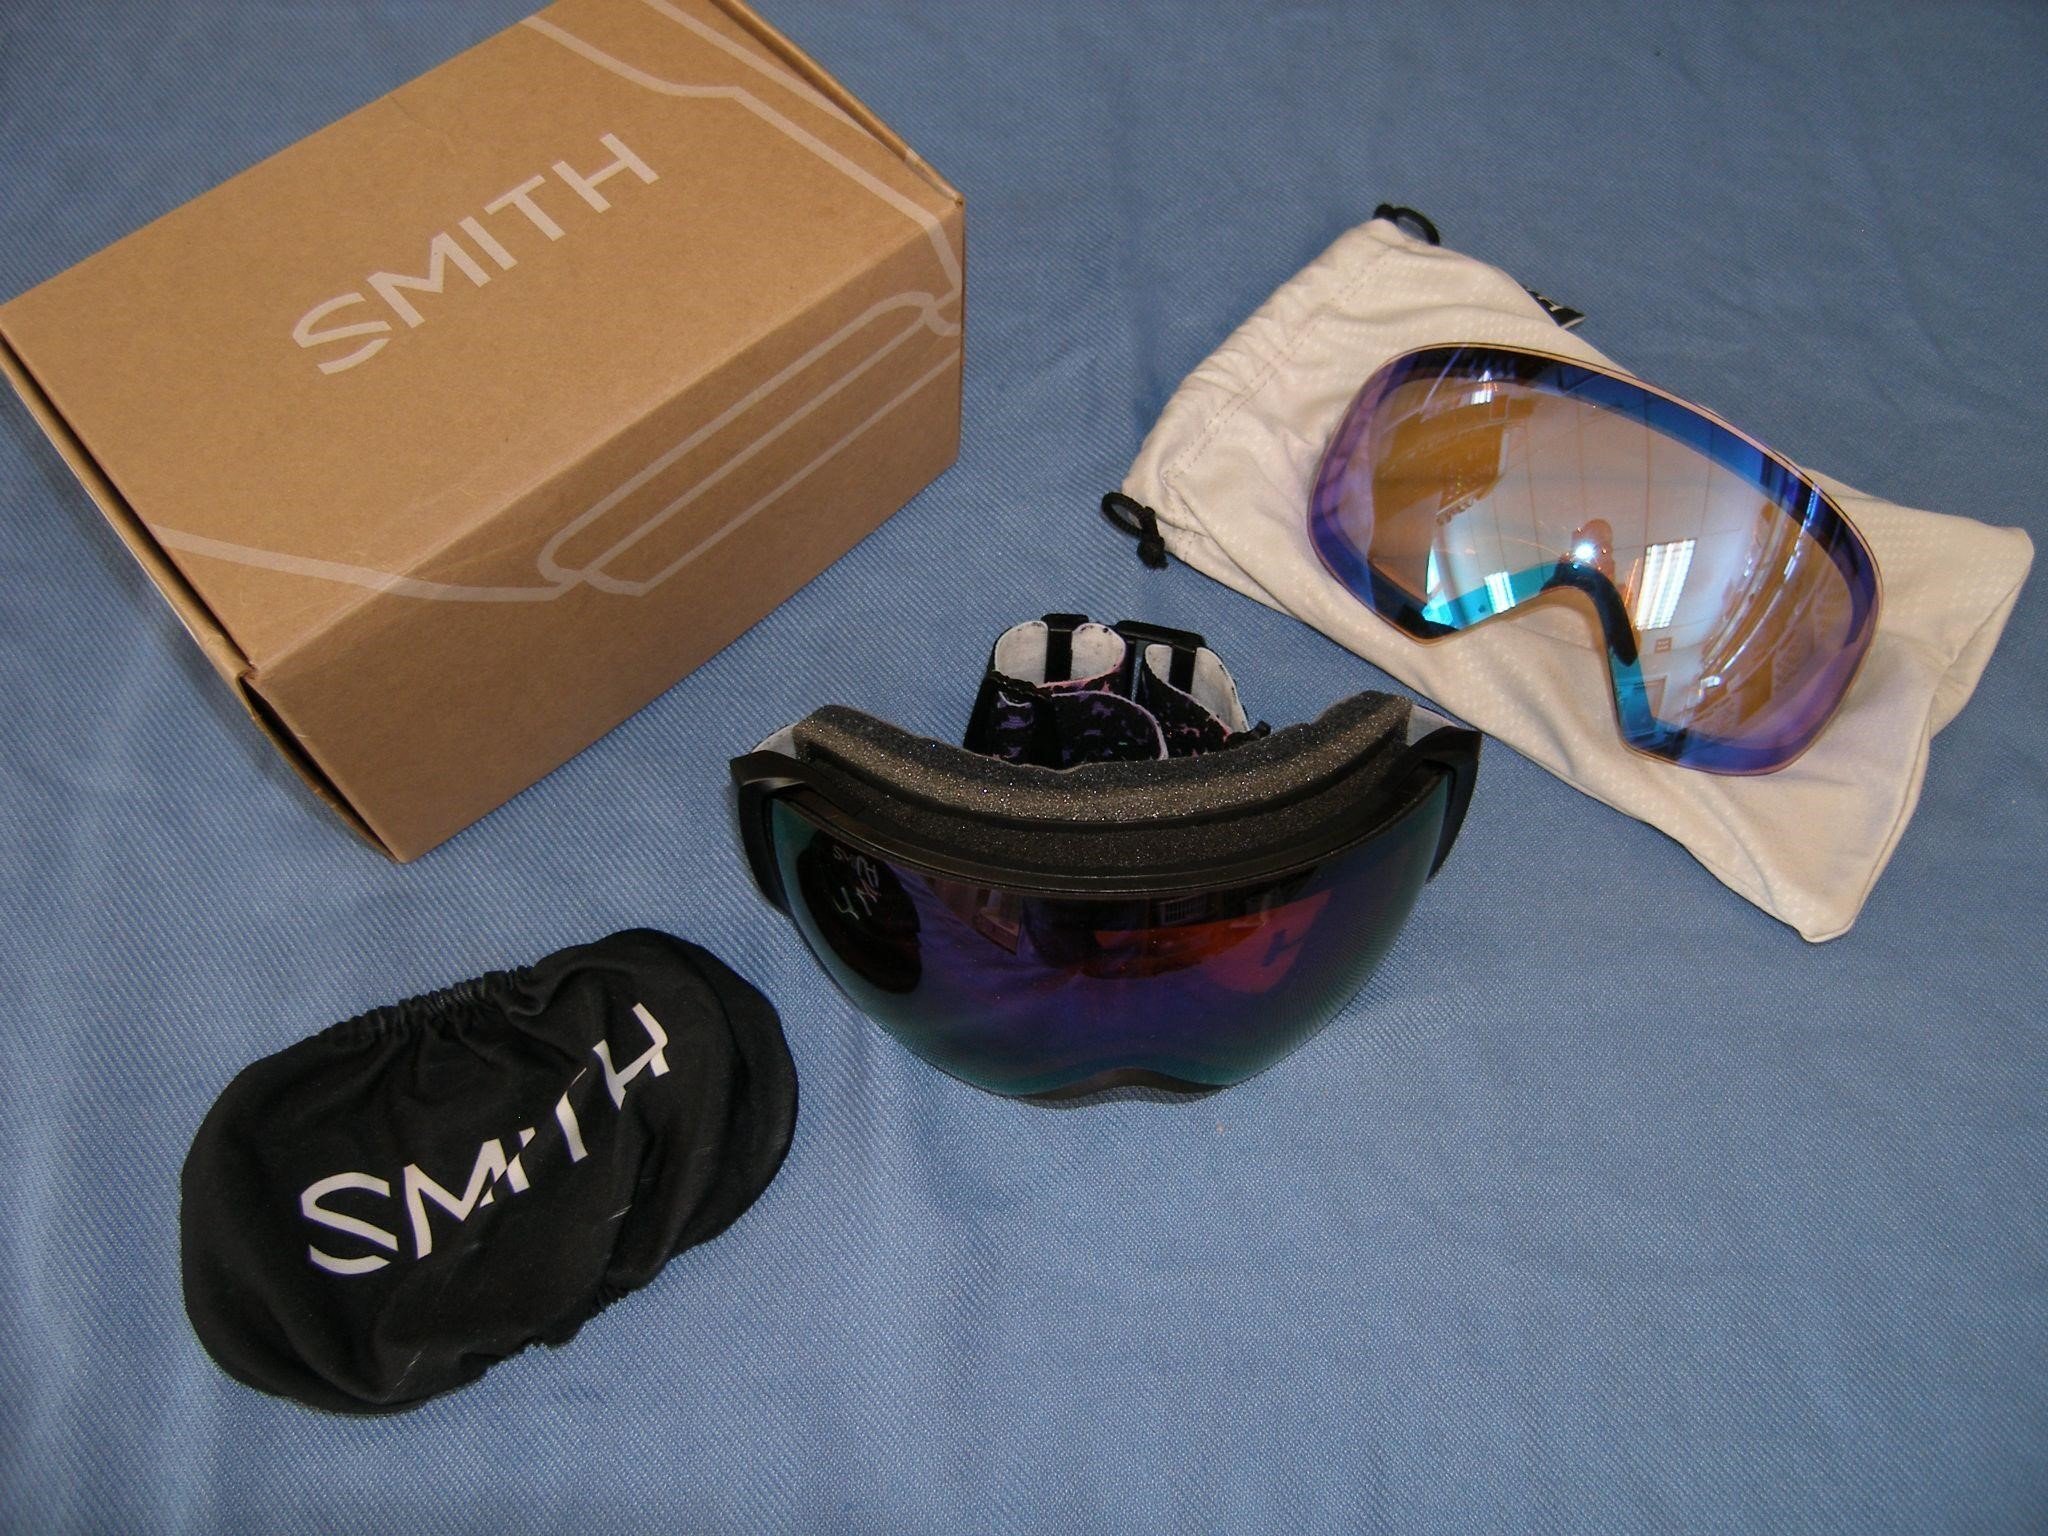 SMITH I/O MAG S Goggles